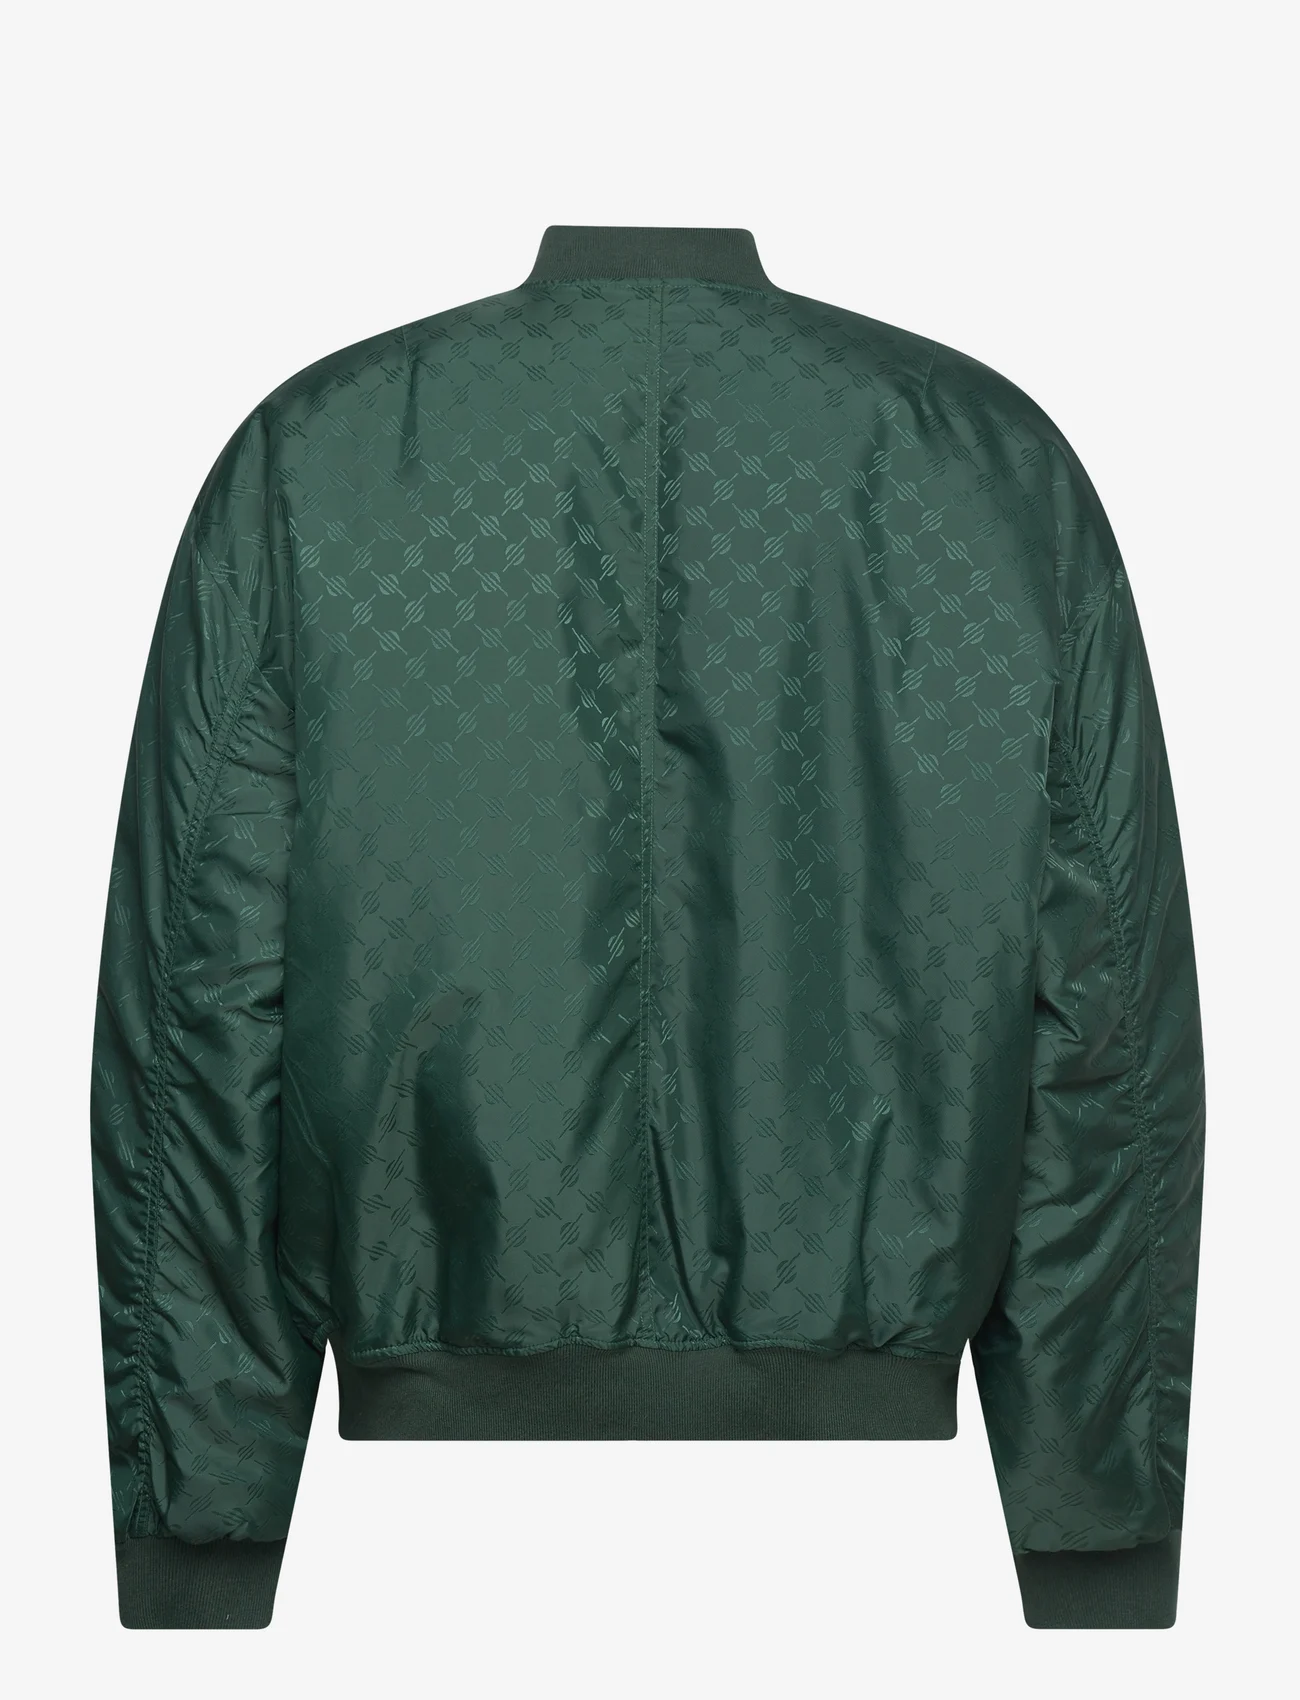 Daily Paper - ronack jacket - lentejassen - pine green - 1